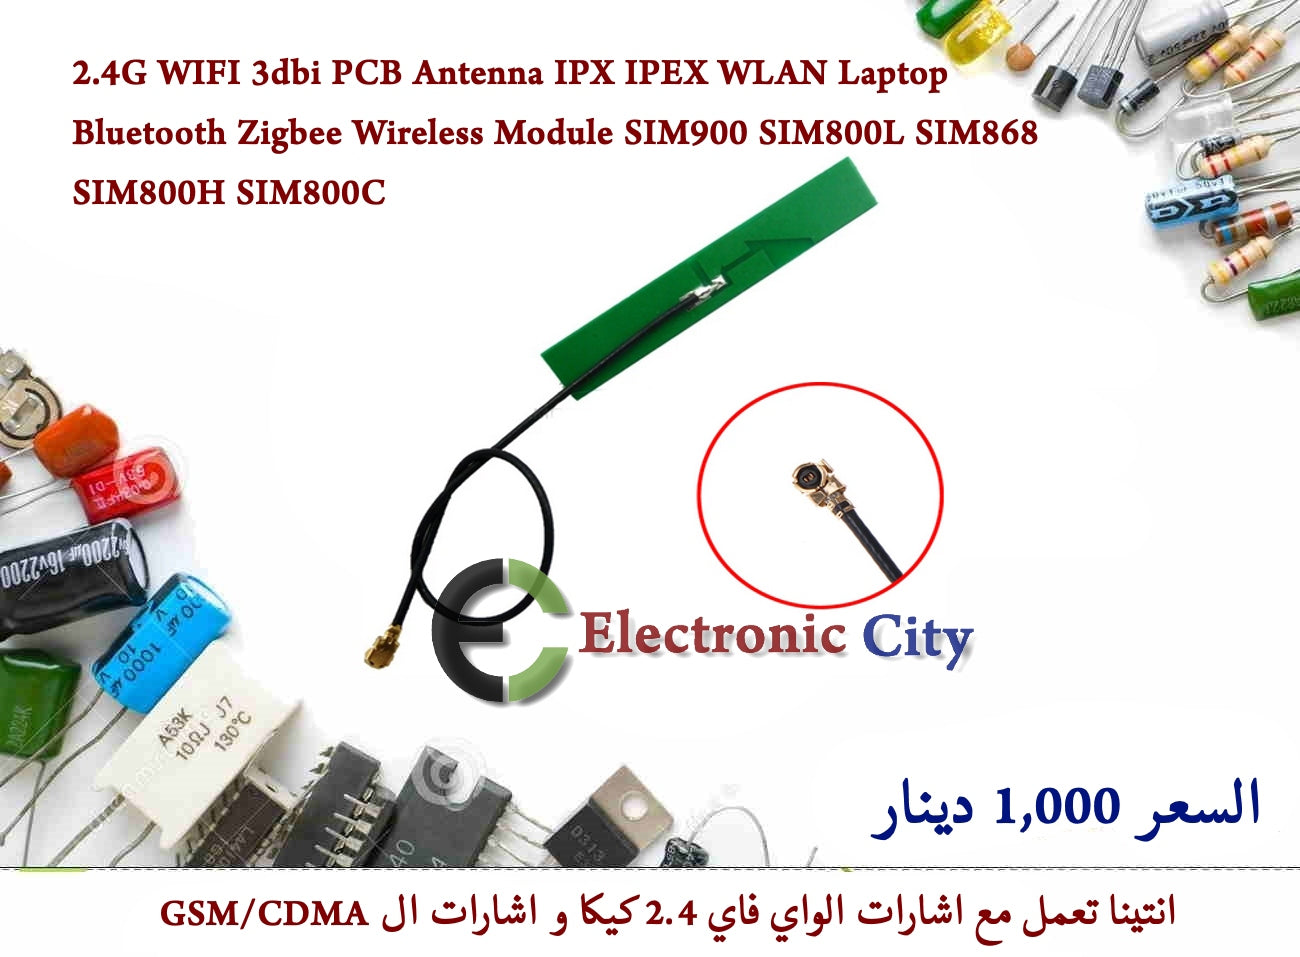 2.4G WIFI 3dbi PCB Antenna IPX IPEX WLAN Laptop Bluetooth Zigbee Wireless Module SIM900 SIM800L SIM868 SIM800H SIM800C